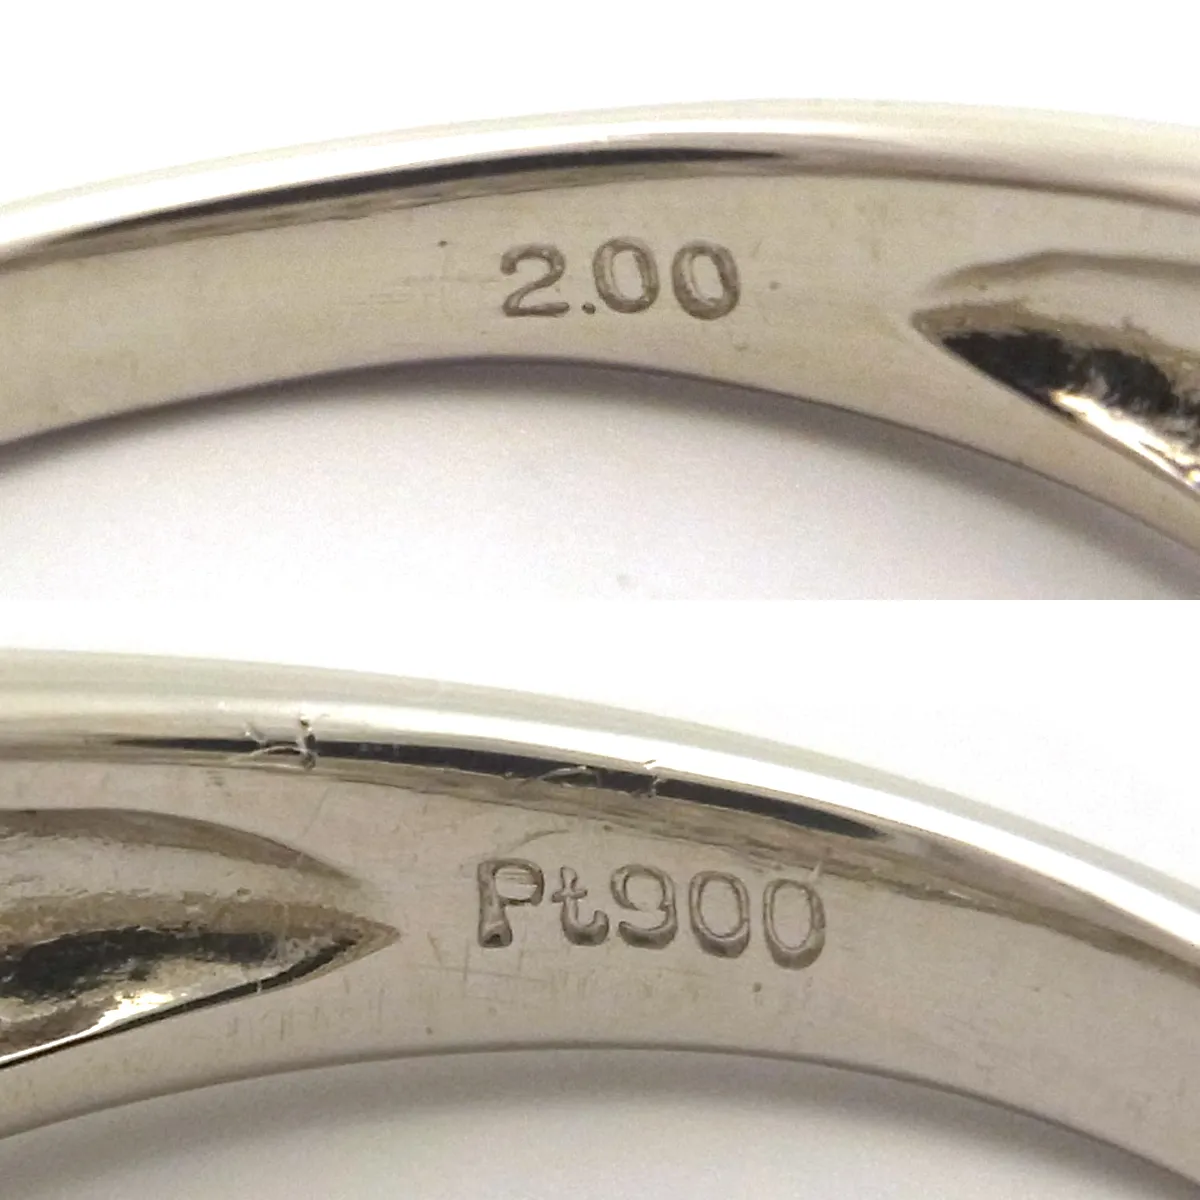 Pt900 ダイヤモンド指輪 13.5号 シルバーカラー